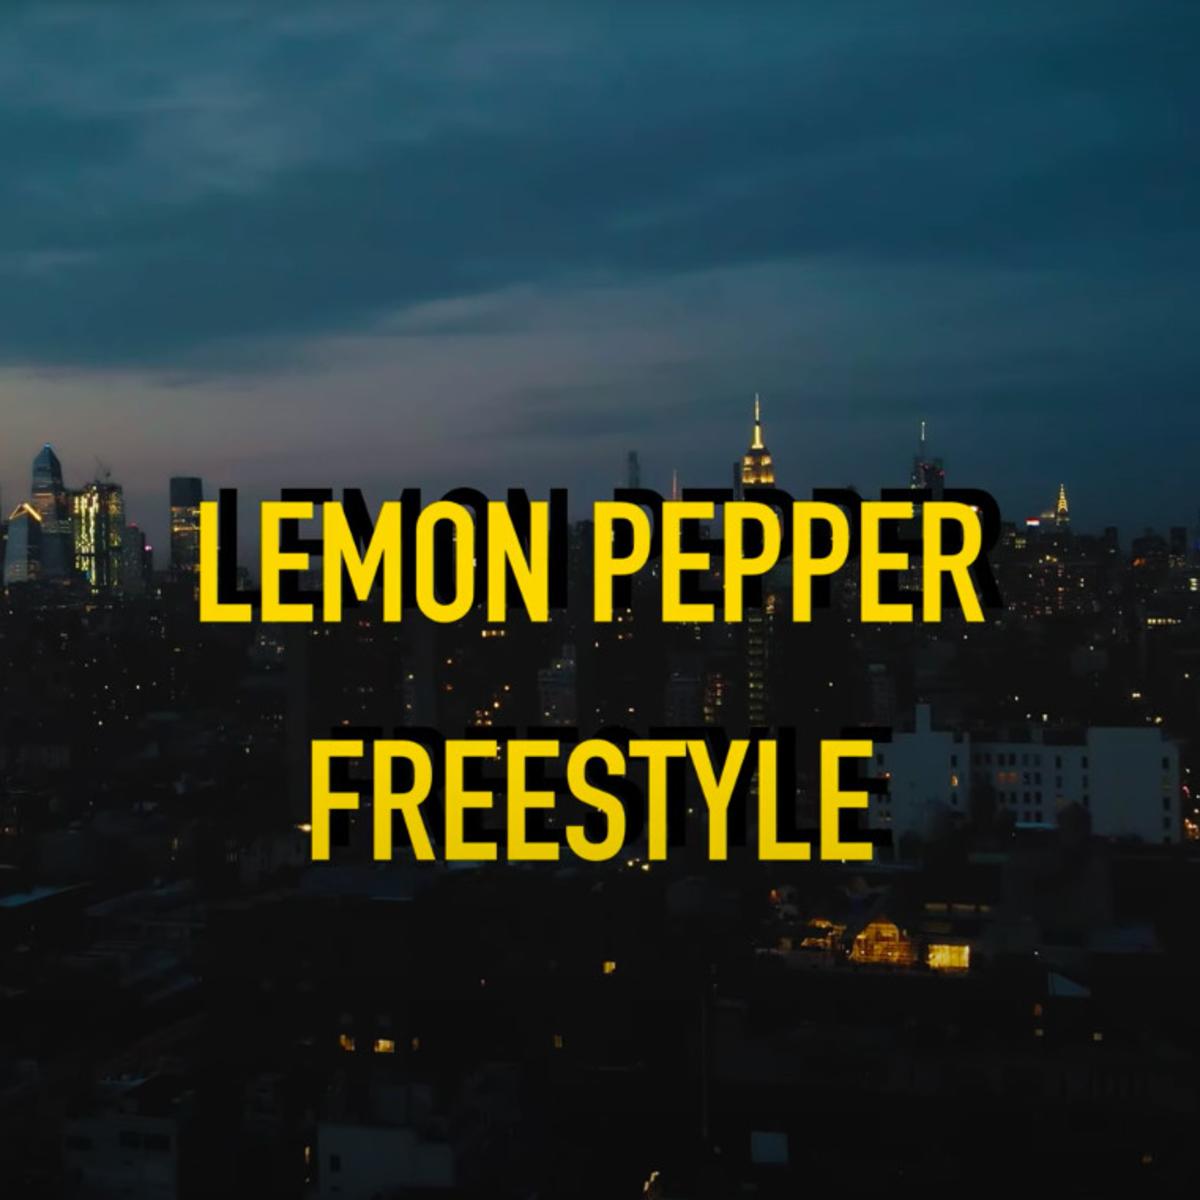 advertise with usMeek Mill - Lemon Pepper Freestyle